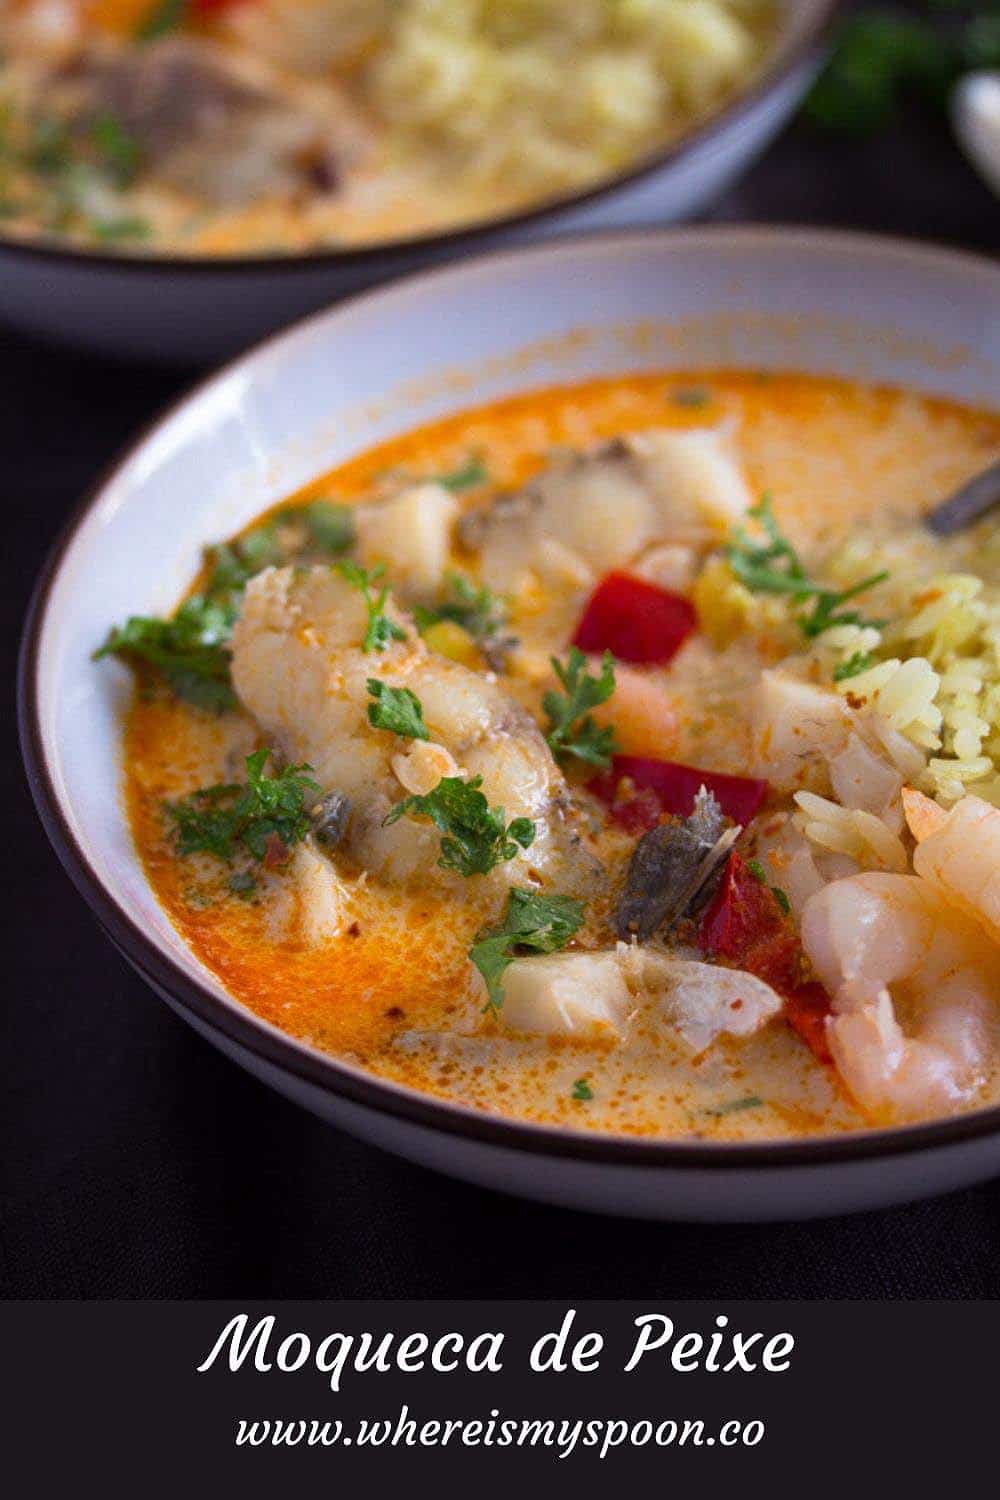 Moqueca de peixe - Brazilian Fish Stew - Where Is My Spoon